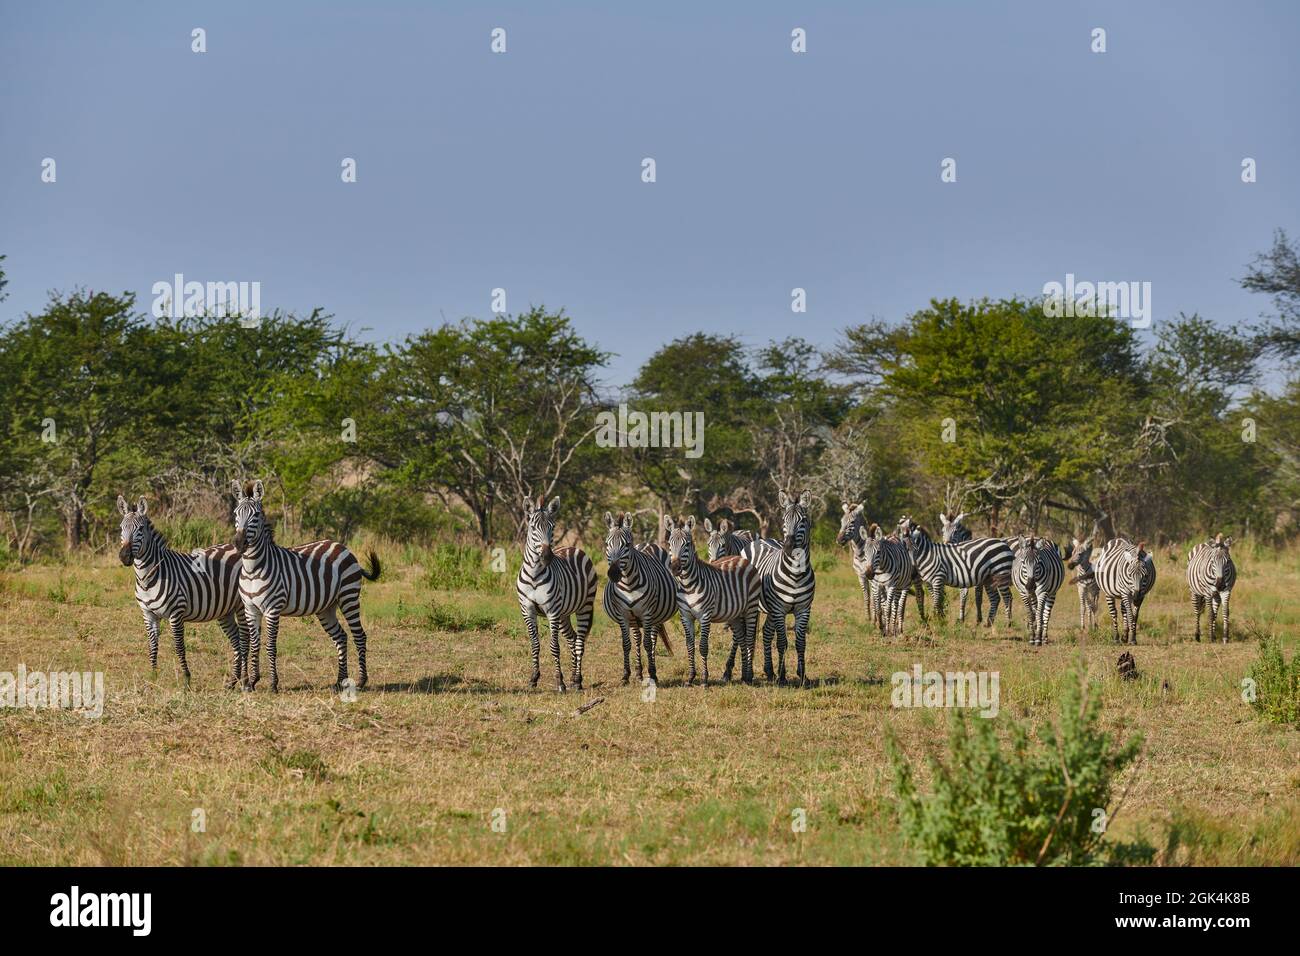 A herd of plains zebras (Equus quagga) in Serengeti National Park, Tanzania, Africa Stock Photo